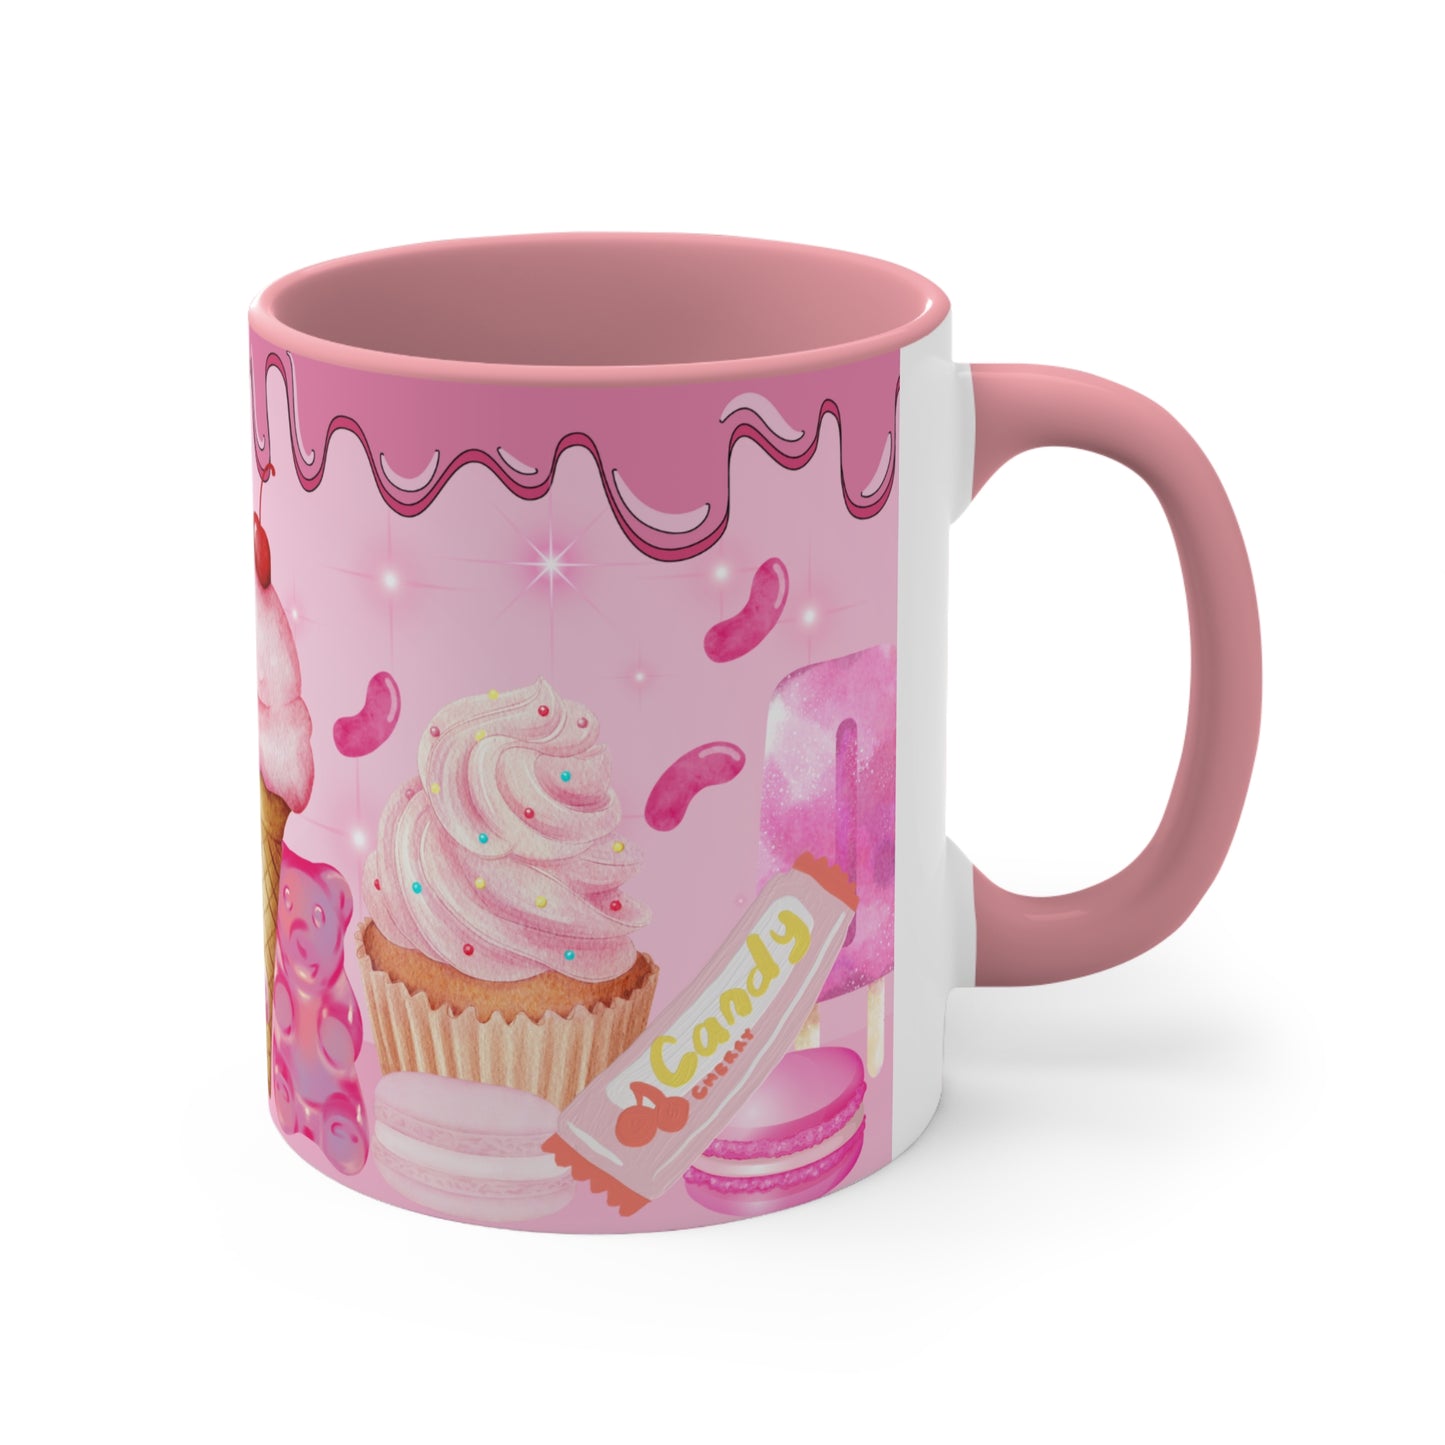 PINK SWEETS Accent Coffee Mug, 11oz